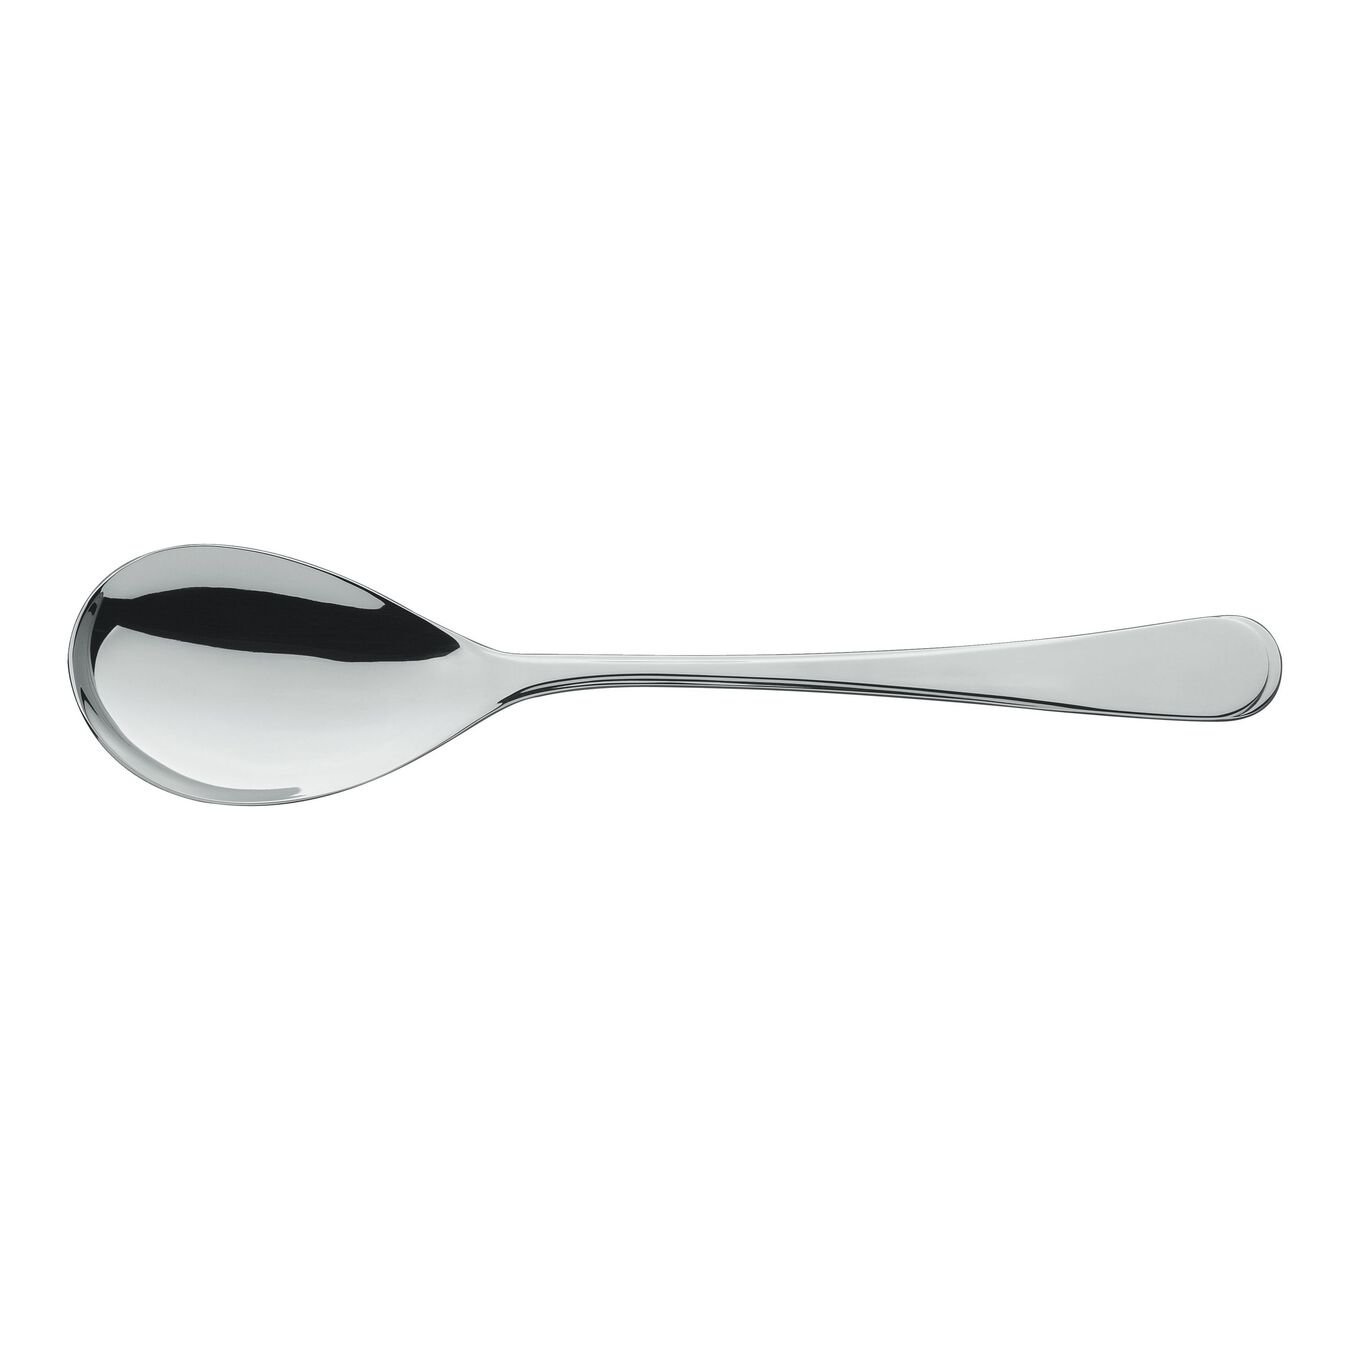 Salad spoon, polished,,large 1